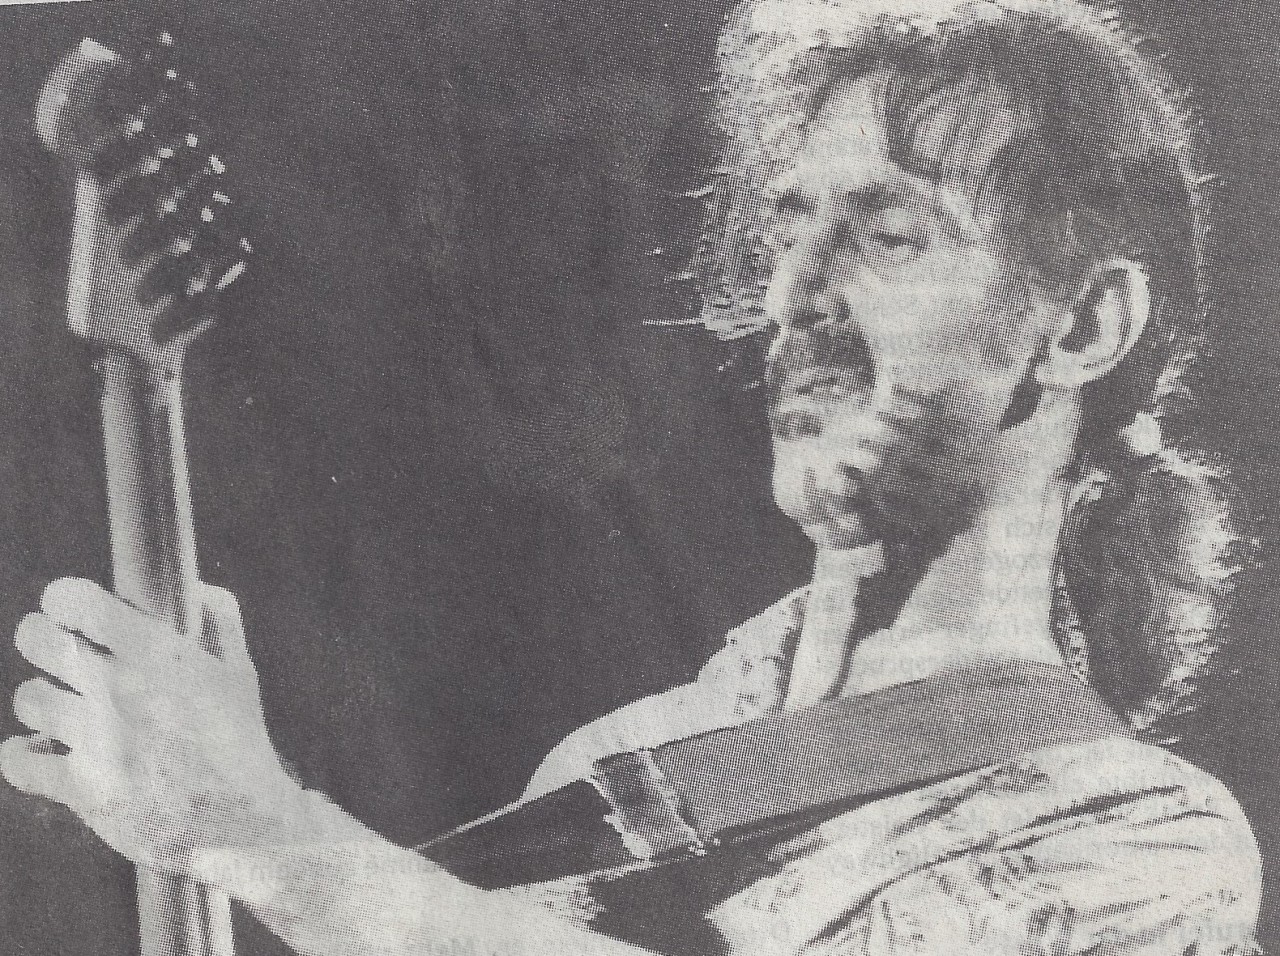 Frank Zappa: Vater der Rockmusik ist tot